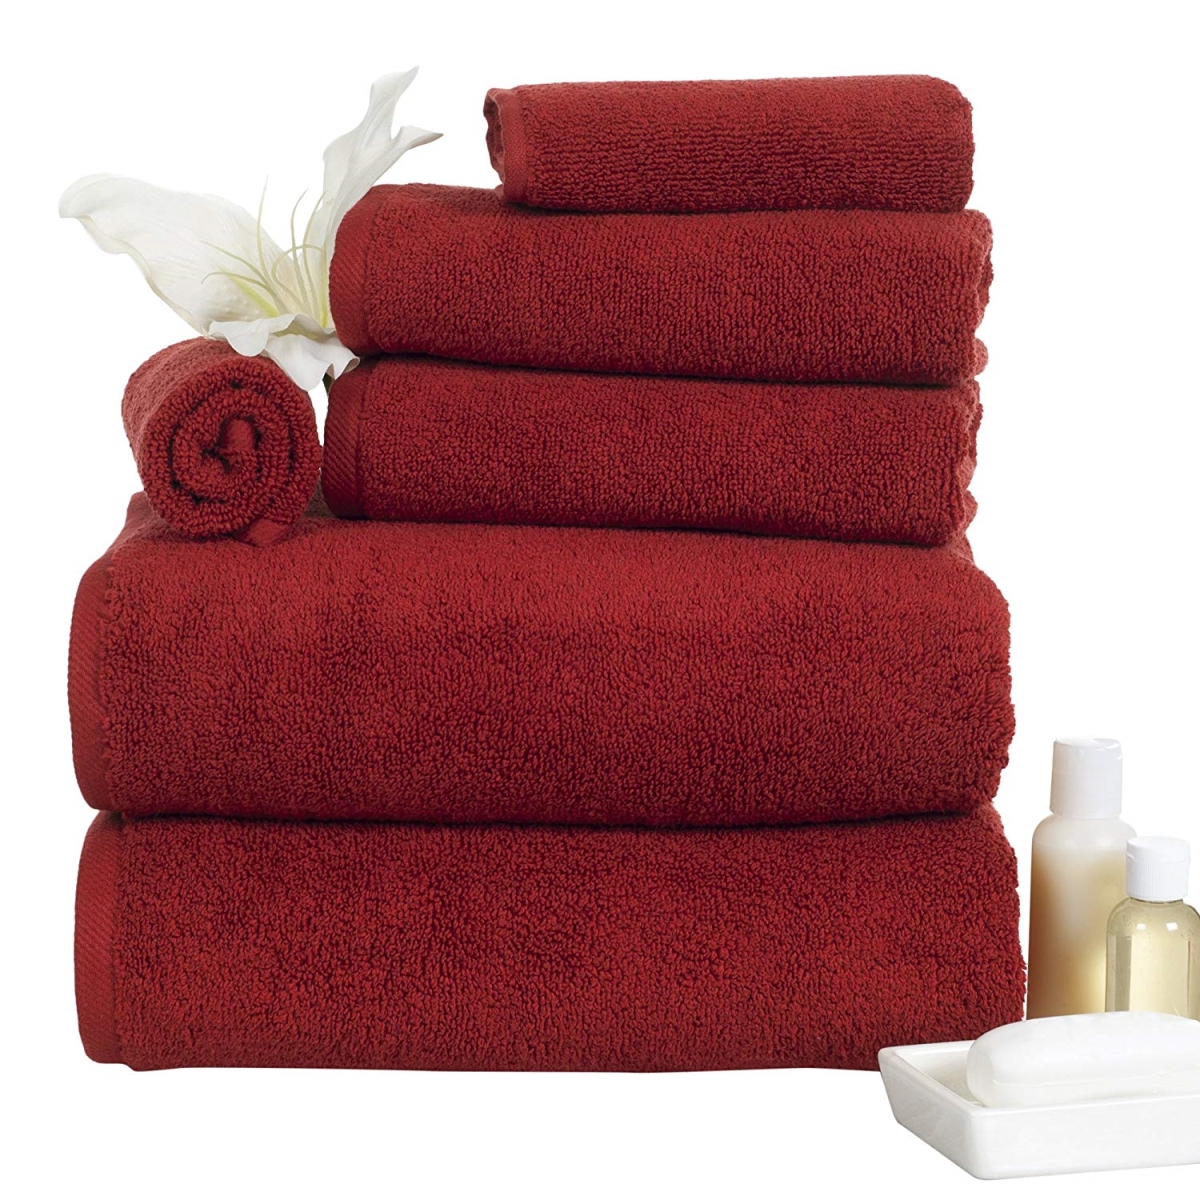 67a-77262 100 Percent Cotton Zero Twist 6 Piece Towel Set - Burgundy